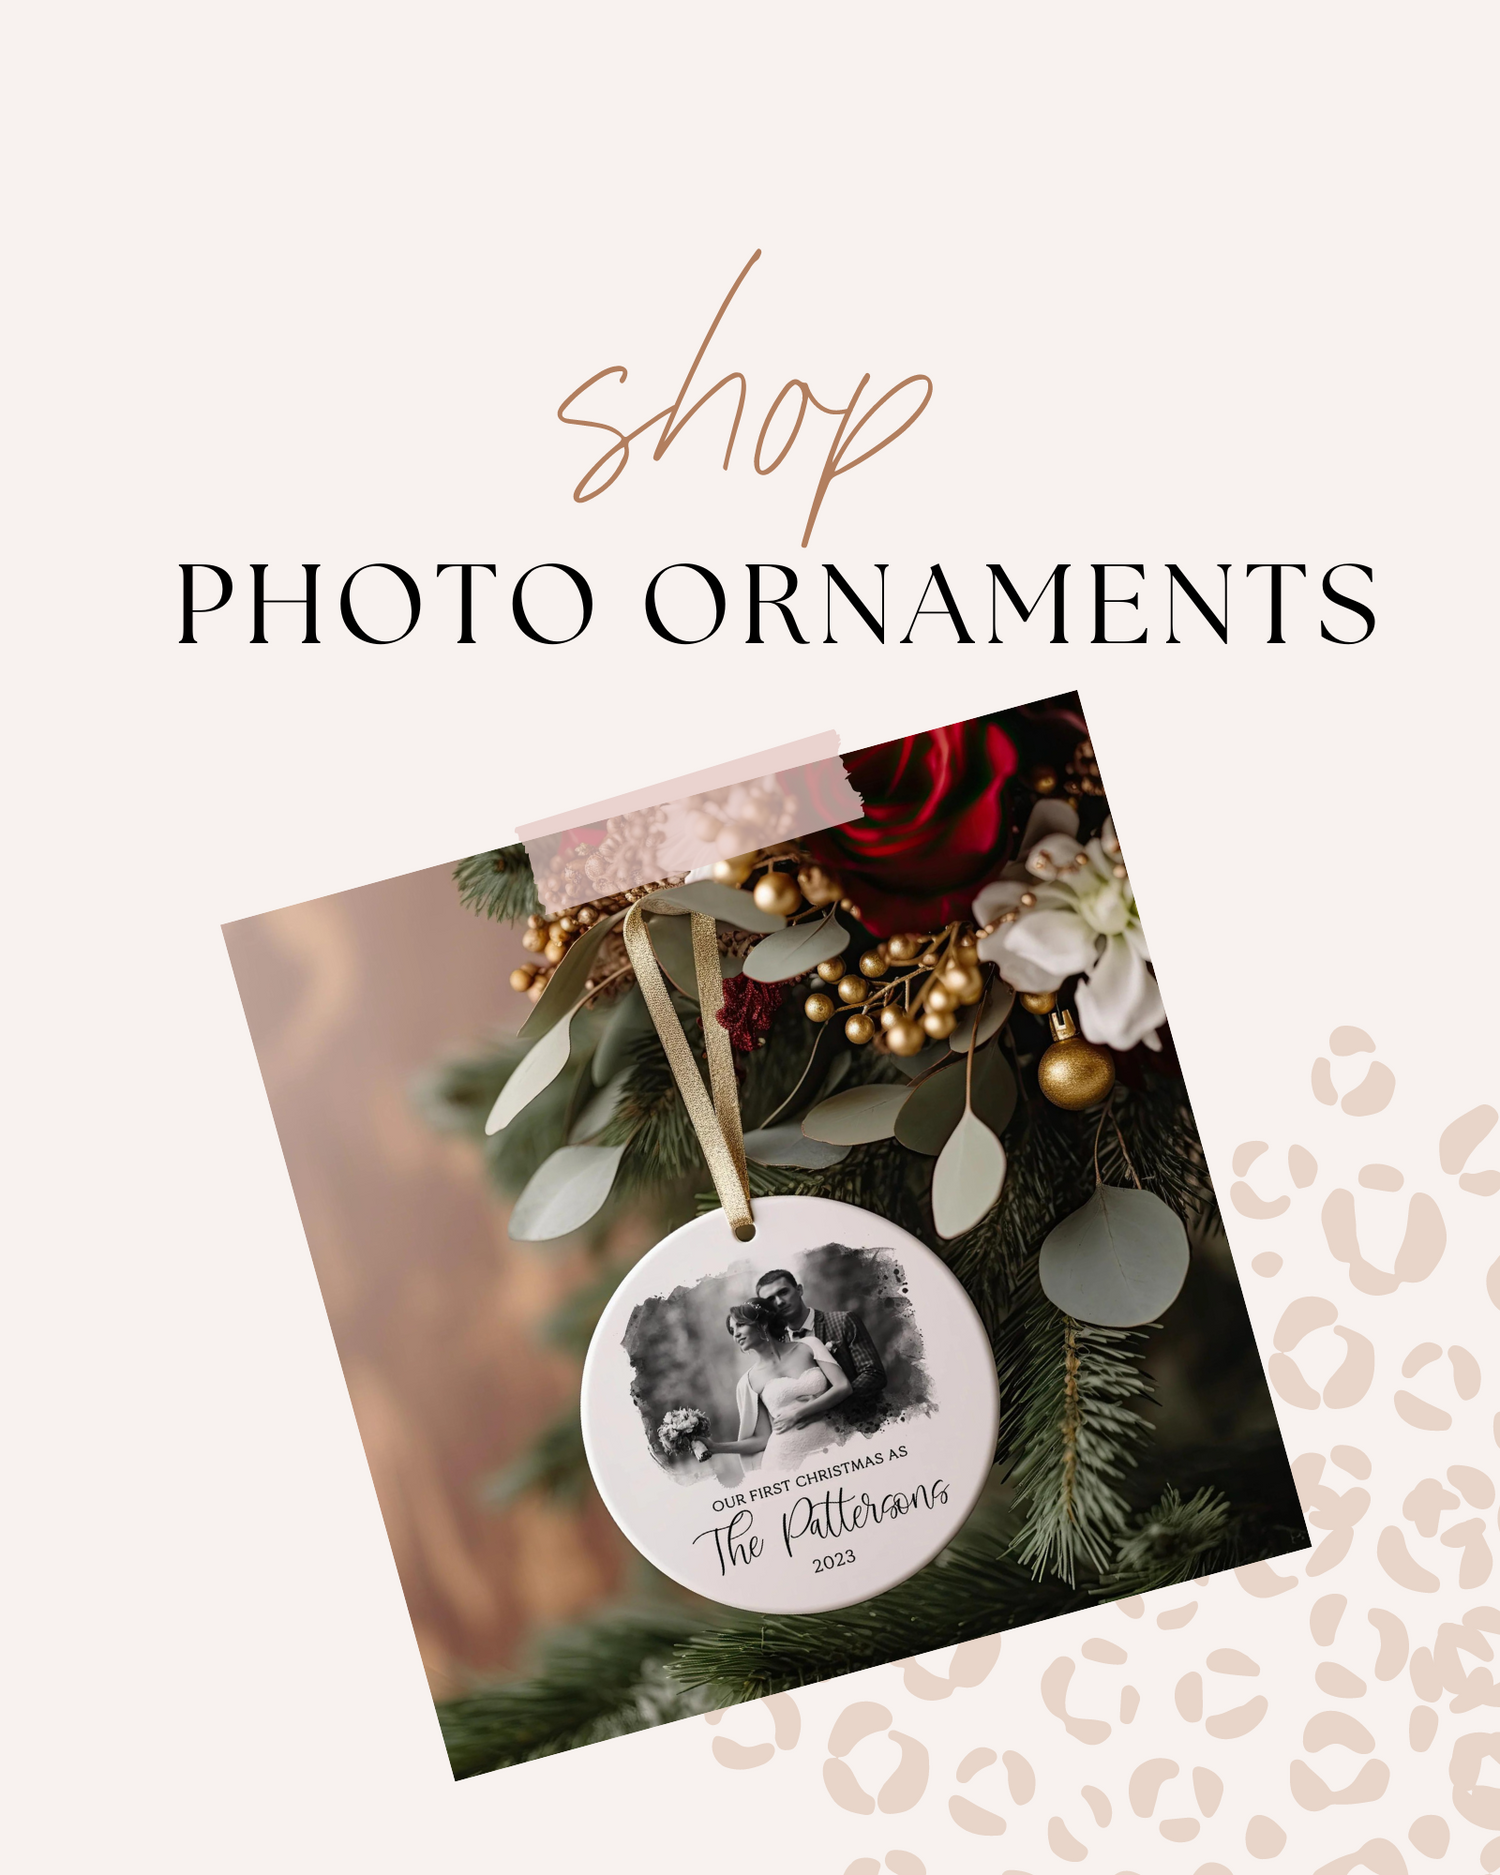 Photo Ornaments